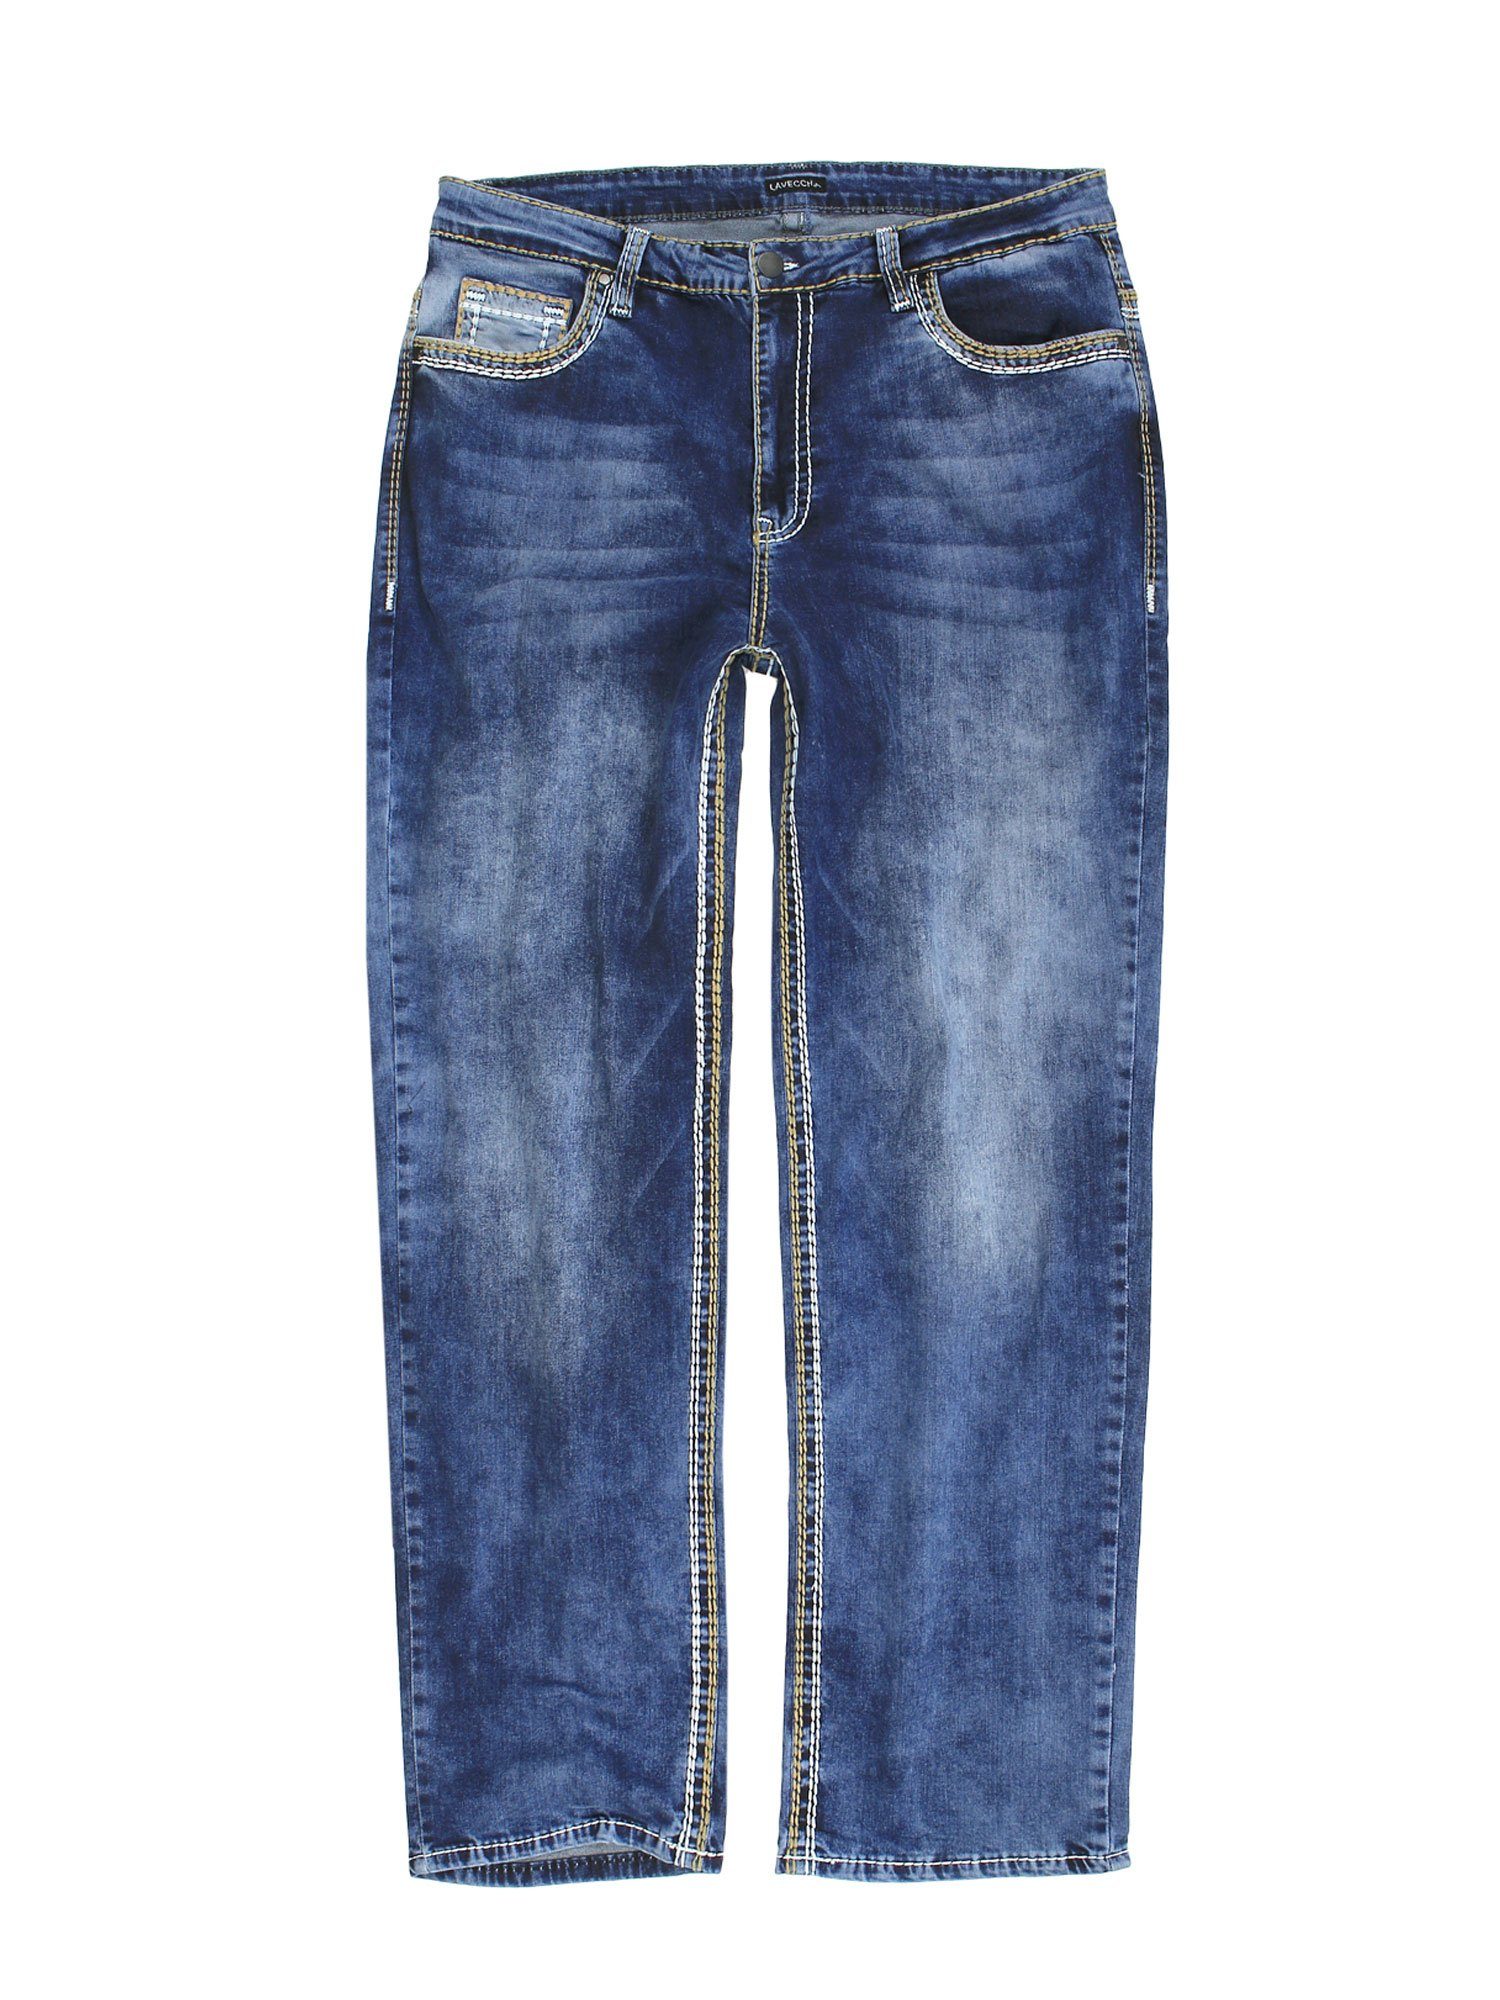 Lavecchia Comfort-fit-Jeans Übergrößen Herren Jeanshose LV-503 Stretch mit Elasthan & dicker Naht stoneblau